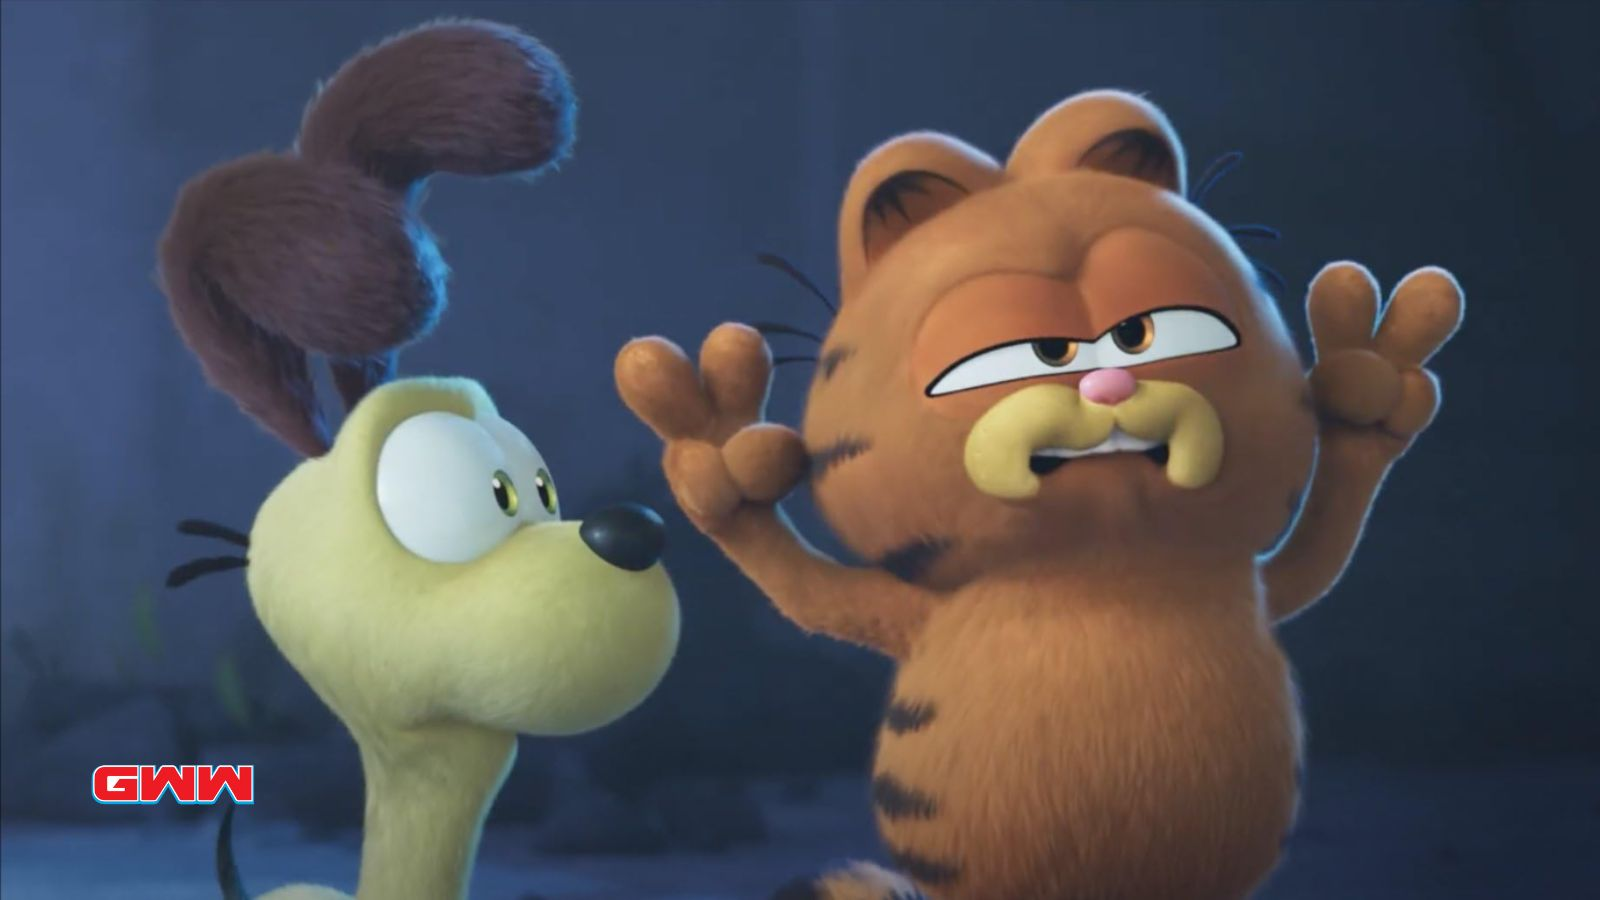 Garfield and Odie talking, The Garfield Movie trailer